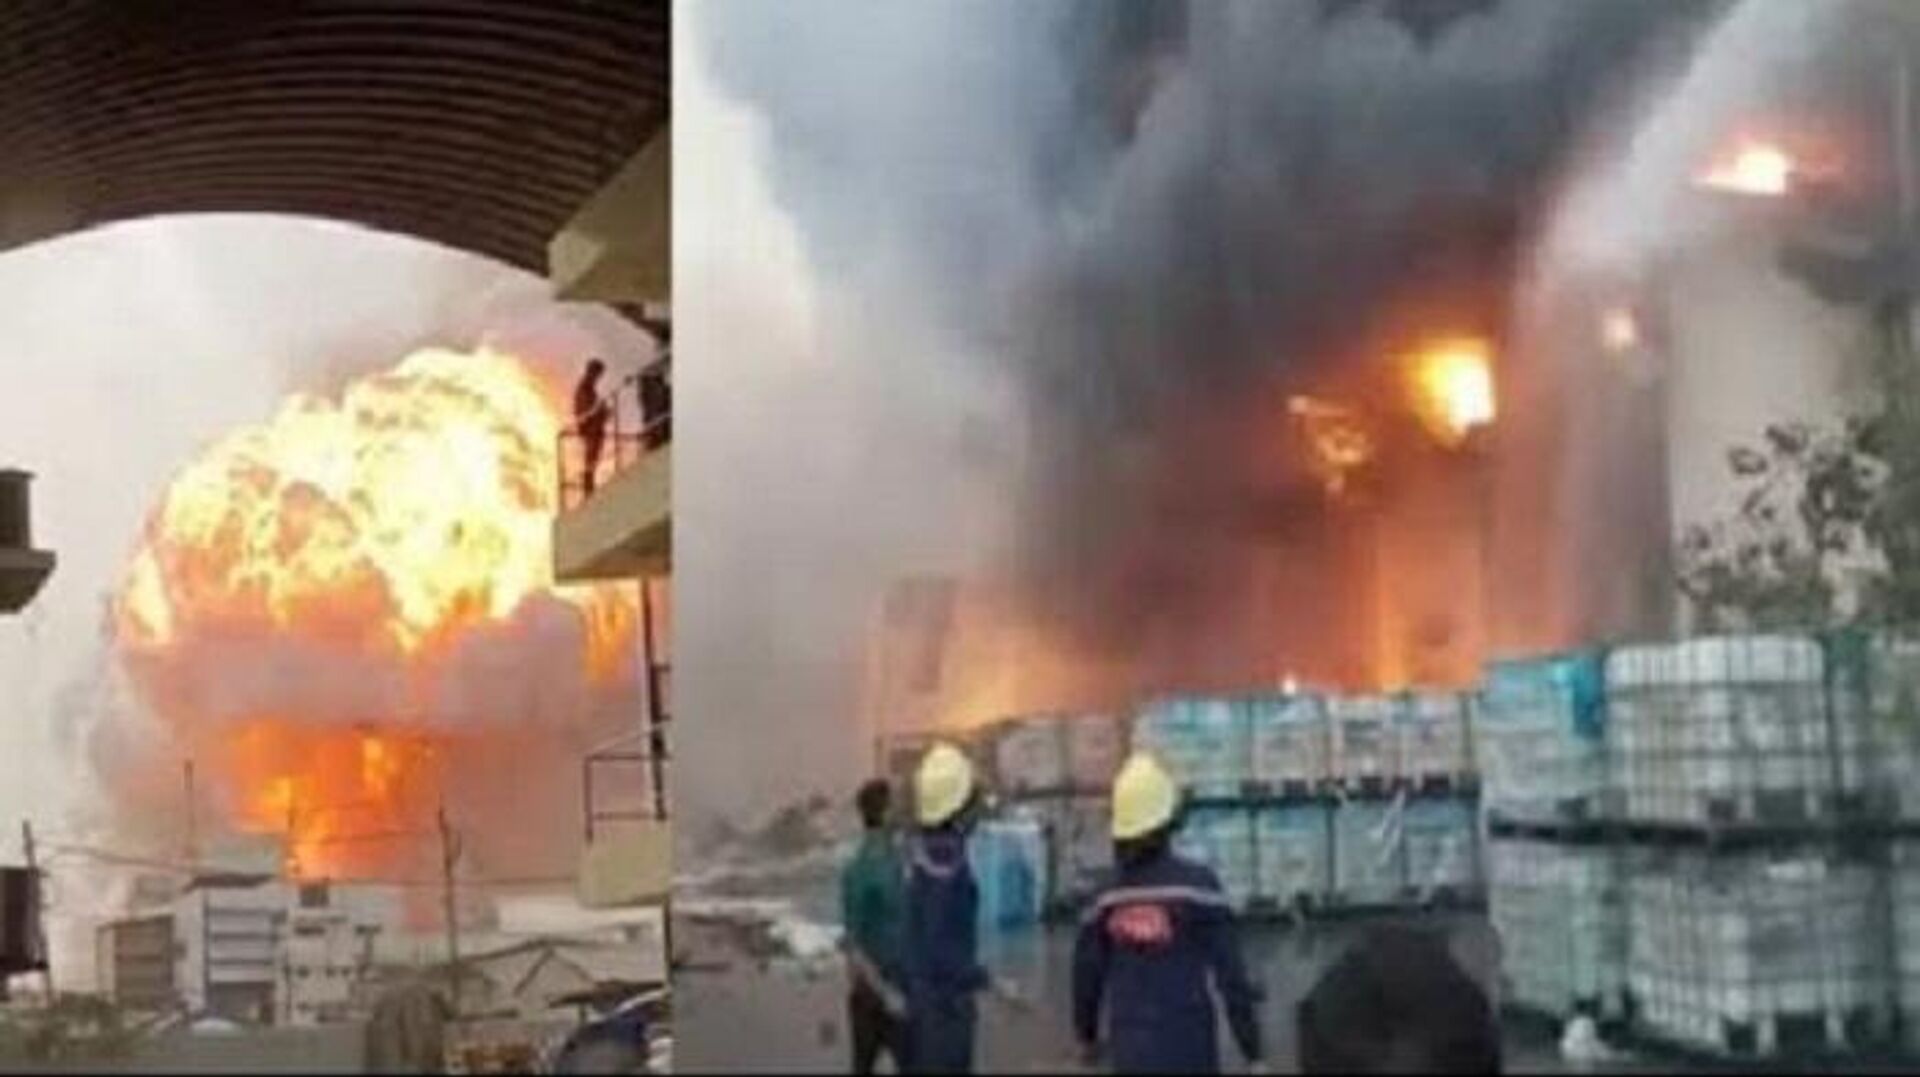  
Gujarat: Major fire breaks out at chemical factory in Vadodara - Sputnik International, 1920, 04.06.2022